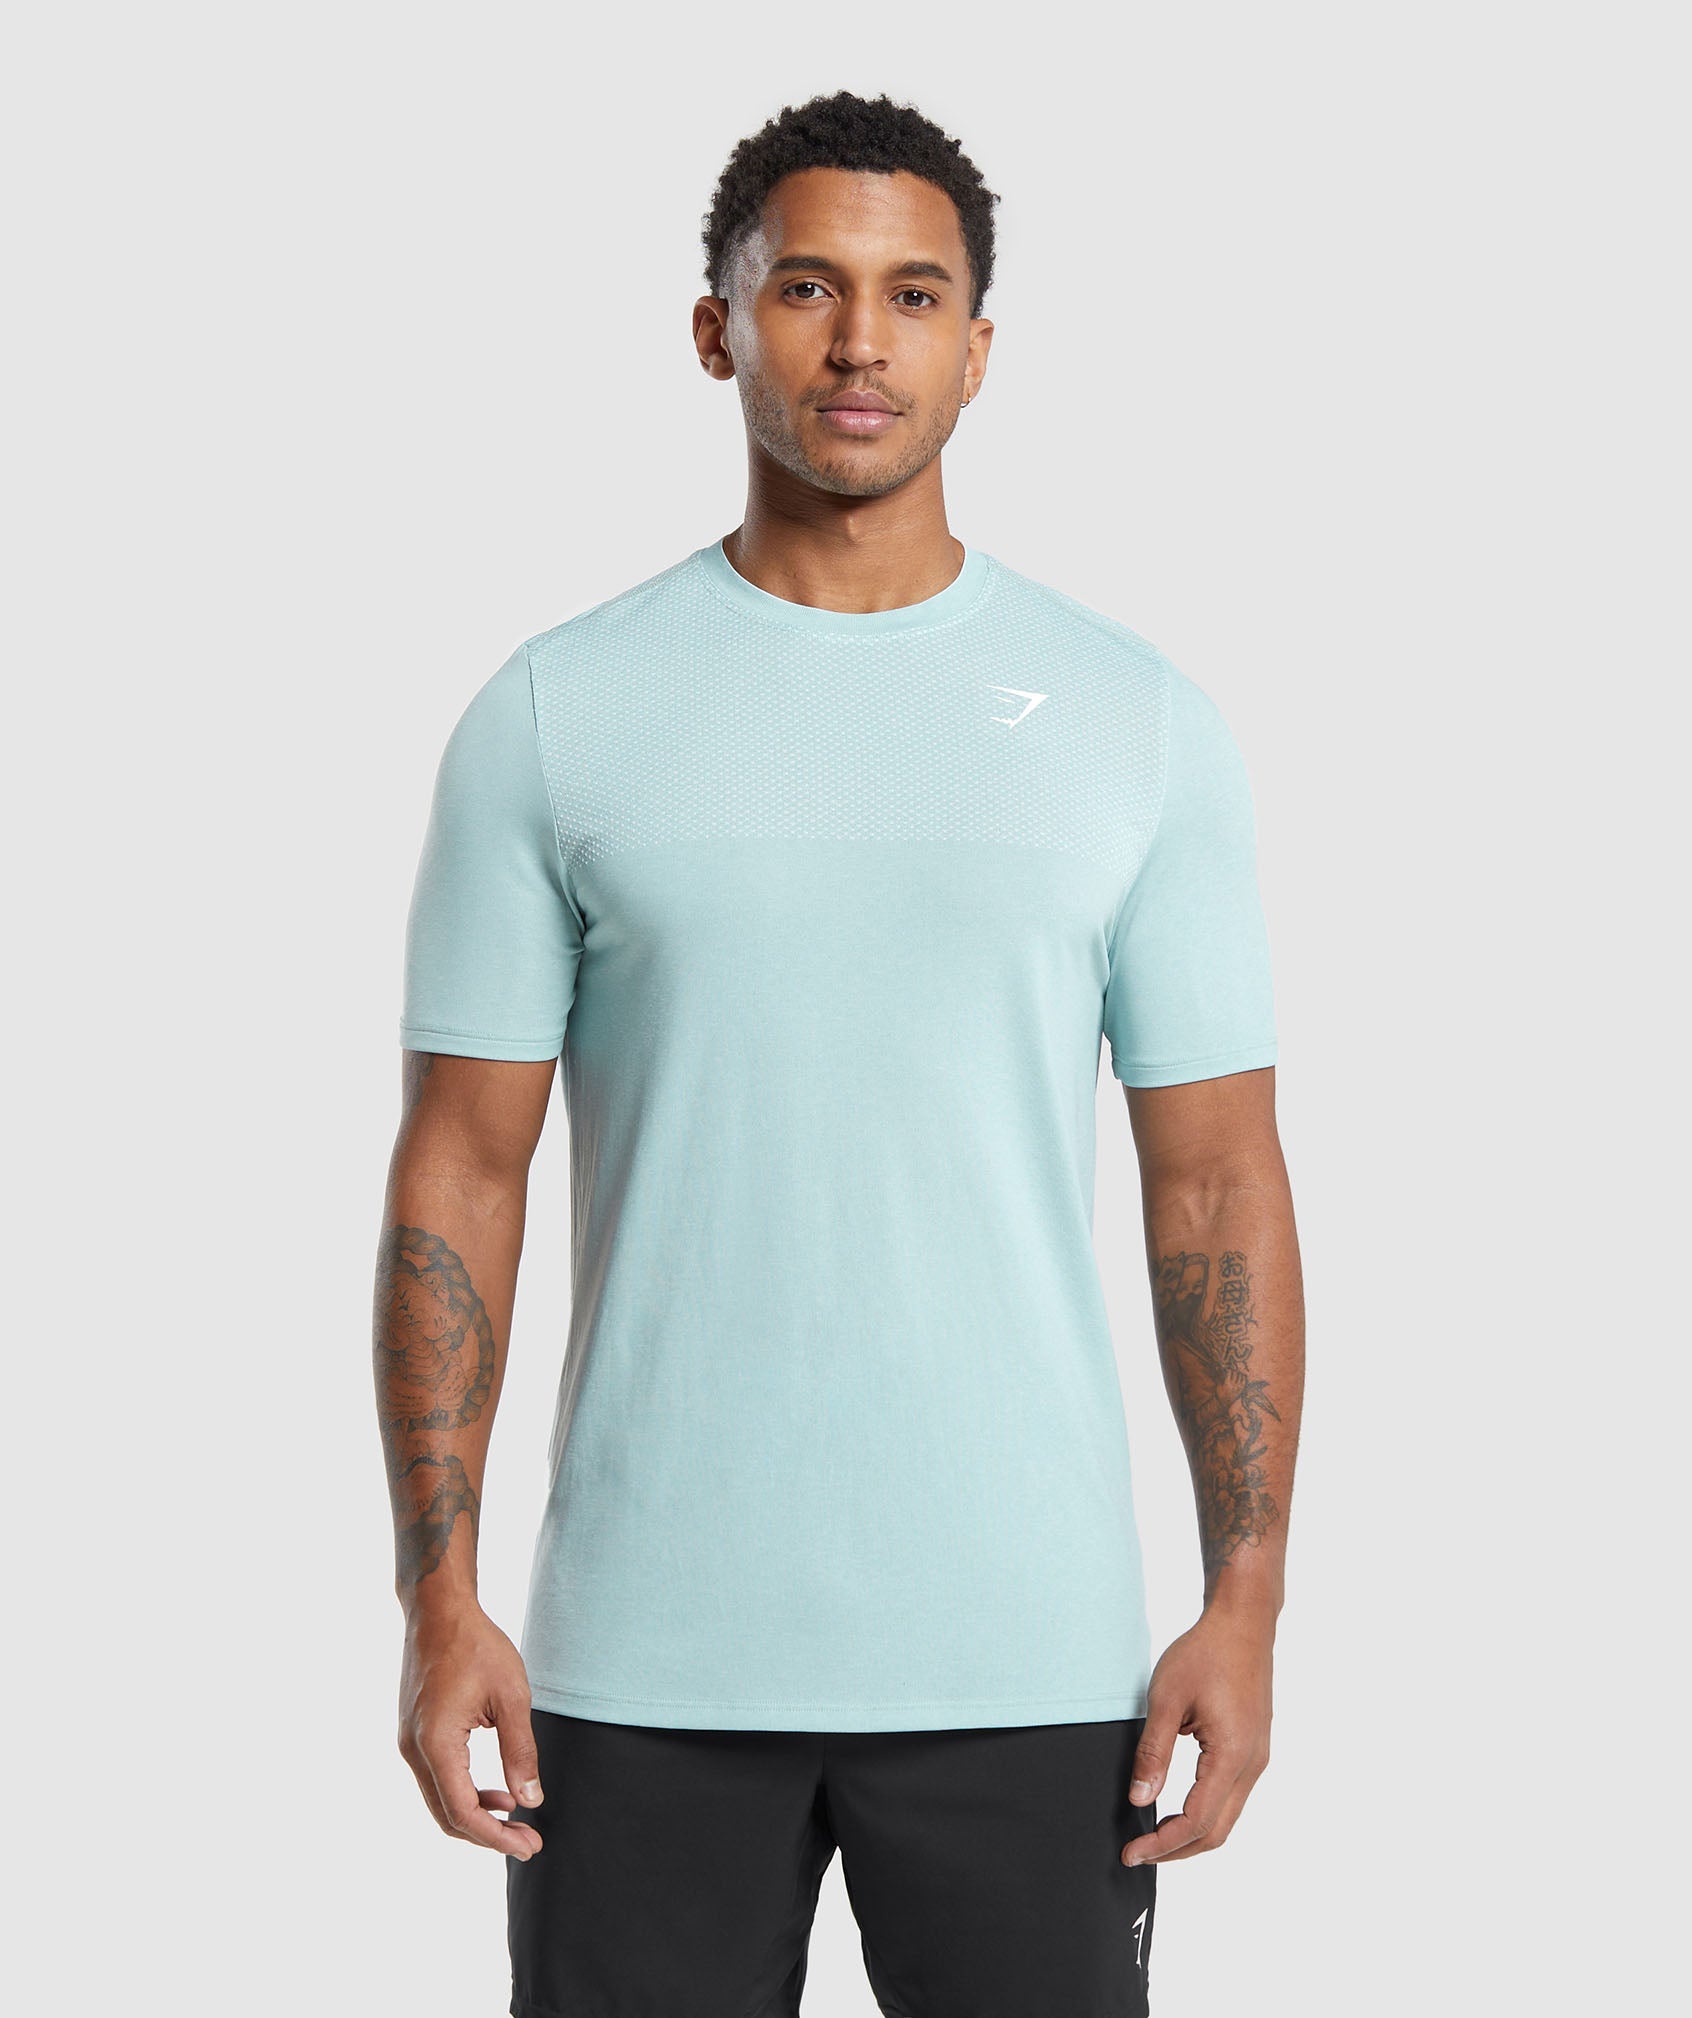 Vital Seamless T-Shirt in Lagoon Green/White Marl - view 1